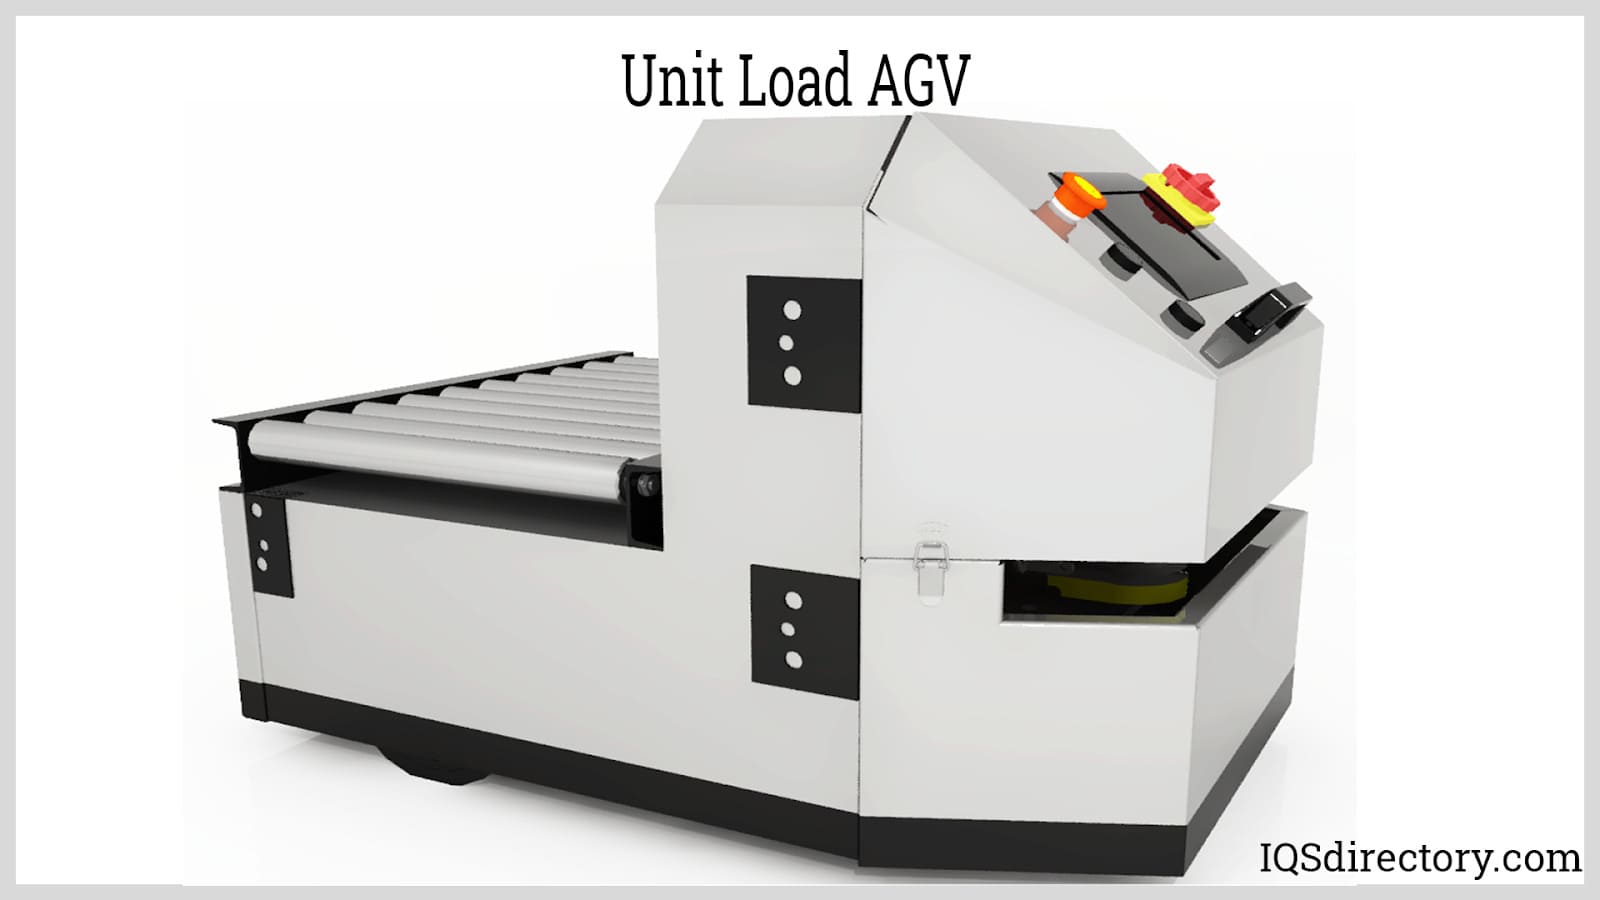 Unit Load AGV